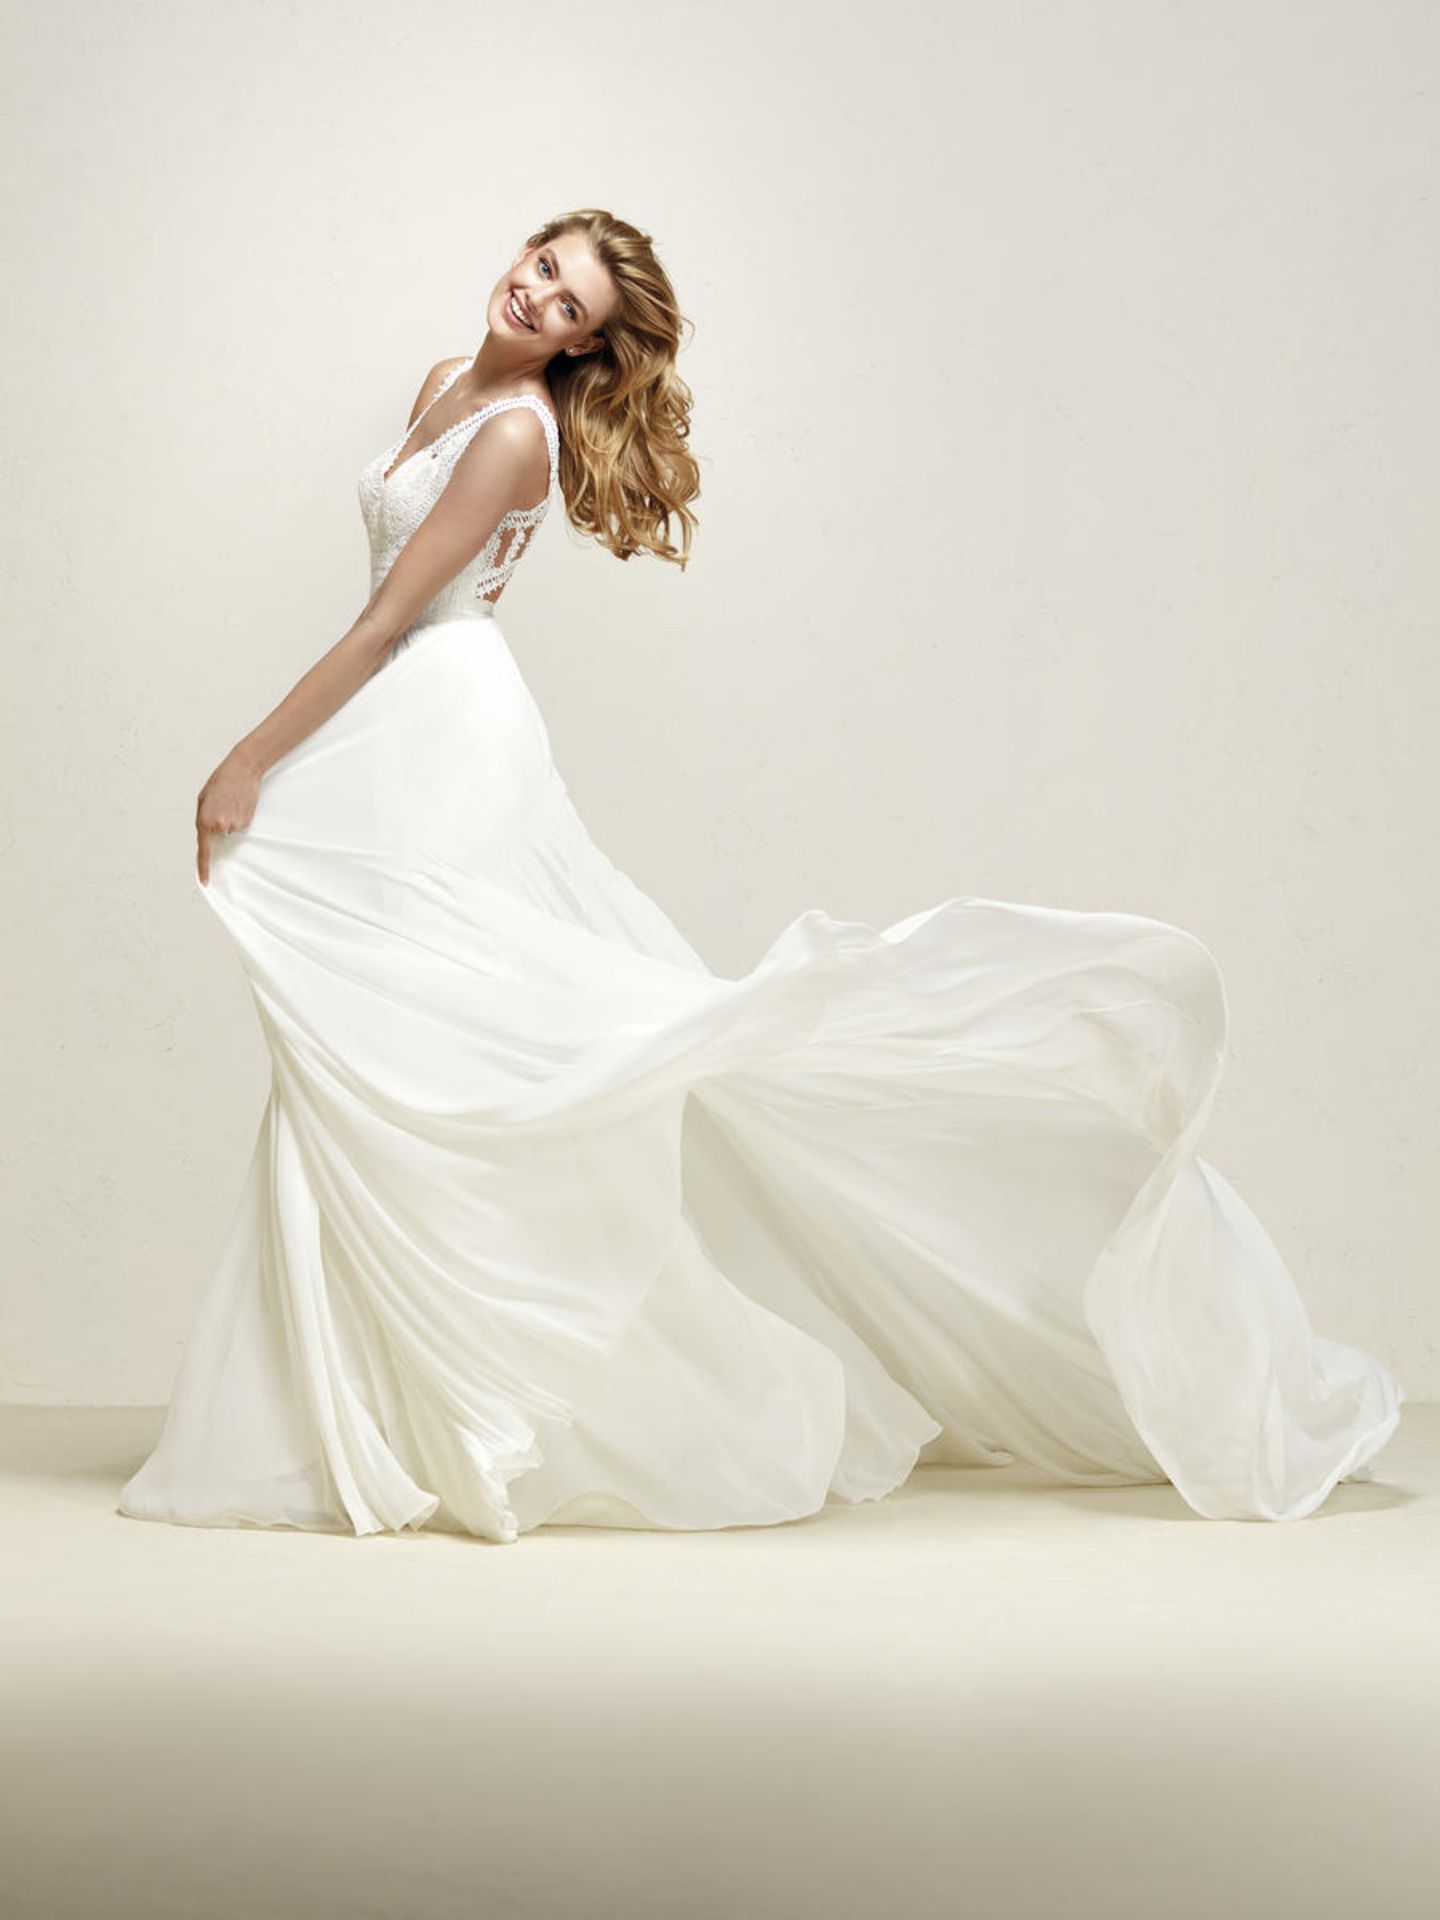 1 x PRONOVIAS 'Dramia' Designer Crocheted Lace Wedding Dress Bridal Gown, With Chiffon Gathered - Image 3 of 20